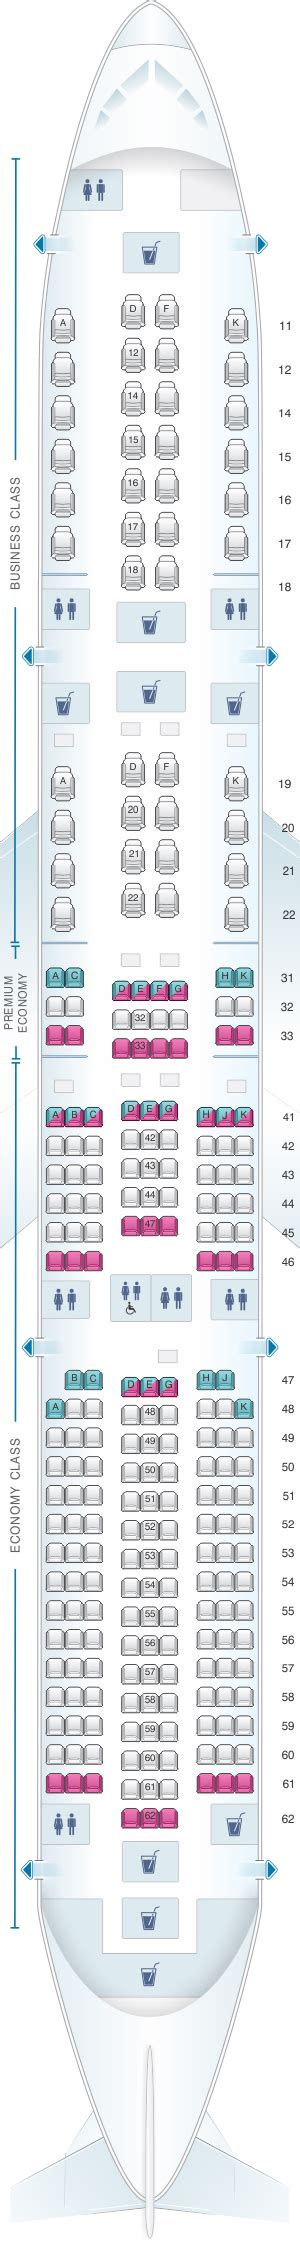 Plan De Cabine Singapore Airlines Airbus A350 900 Seatmaestrofr